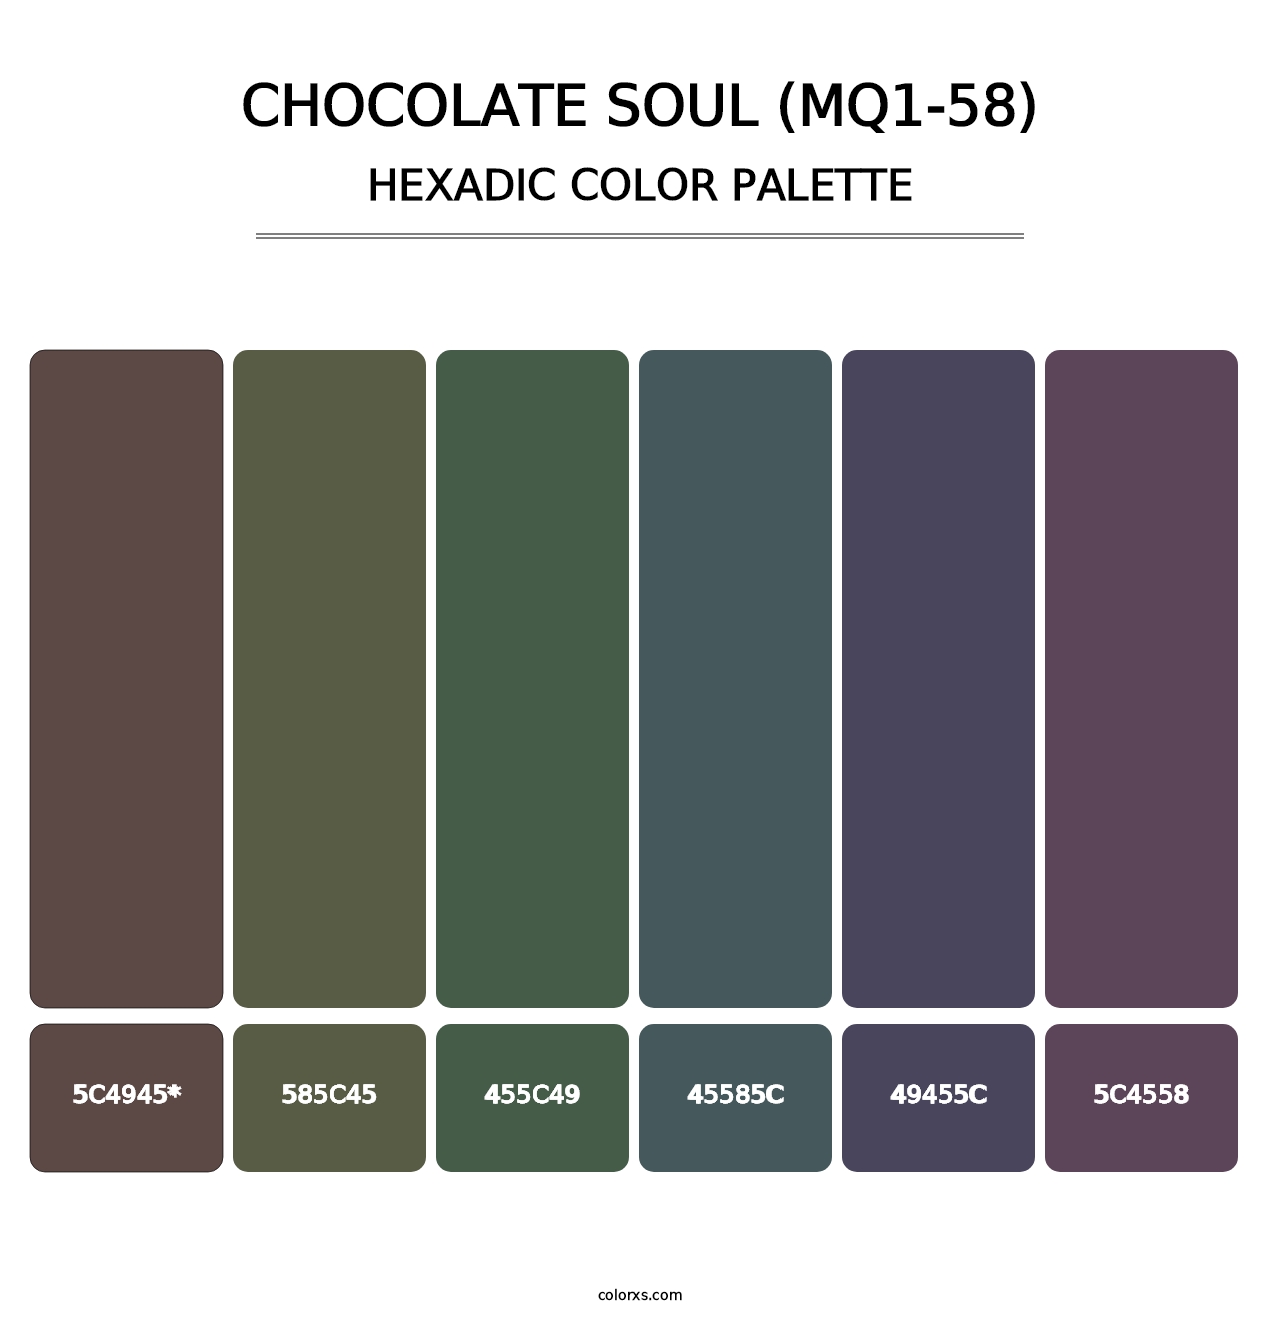 Chocolate Soul (MQ1-58) - Hexadic Color Palette